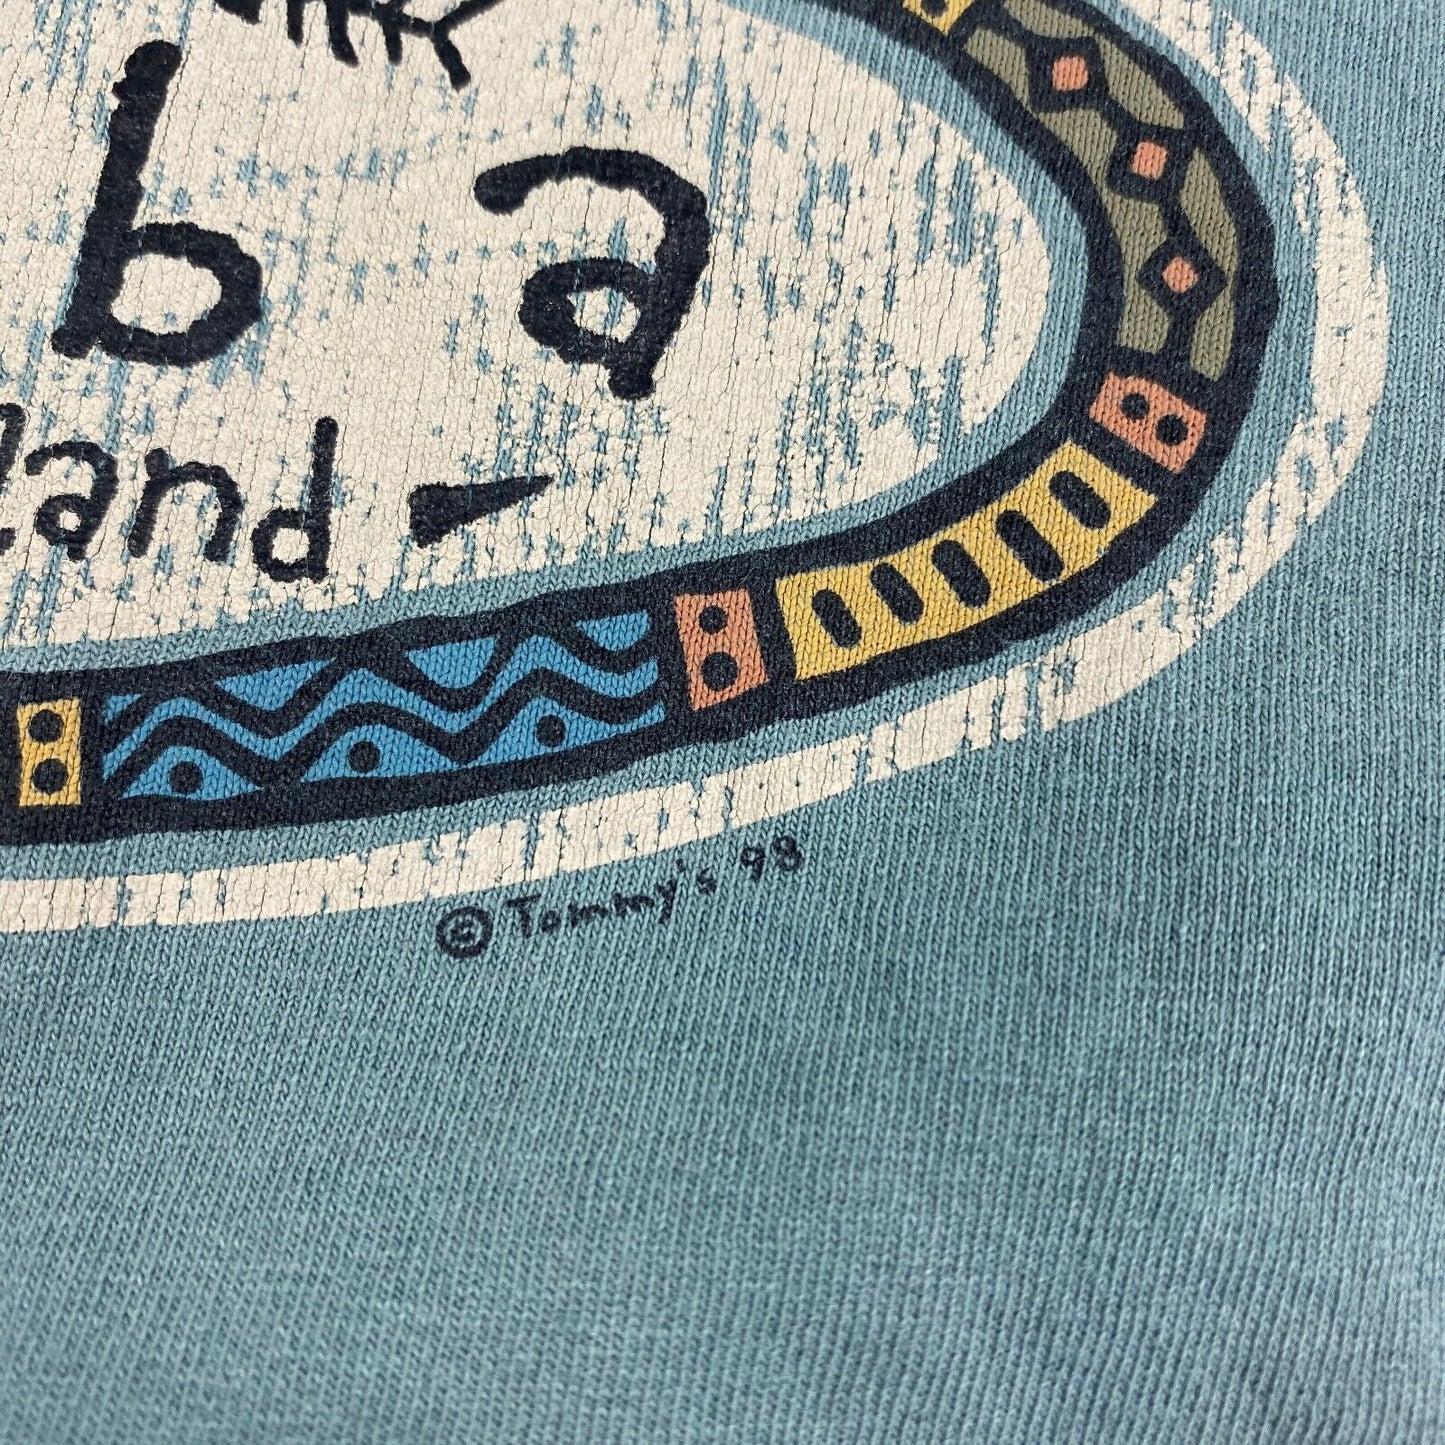 VINTAGE 90s Aruba One Happy Island Faded Blue T-Shirt sz Large Men